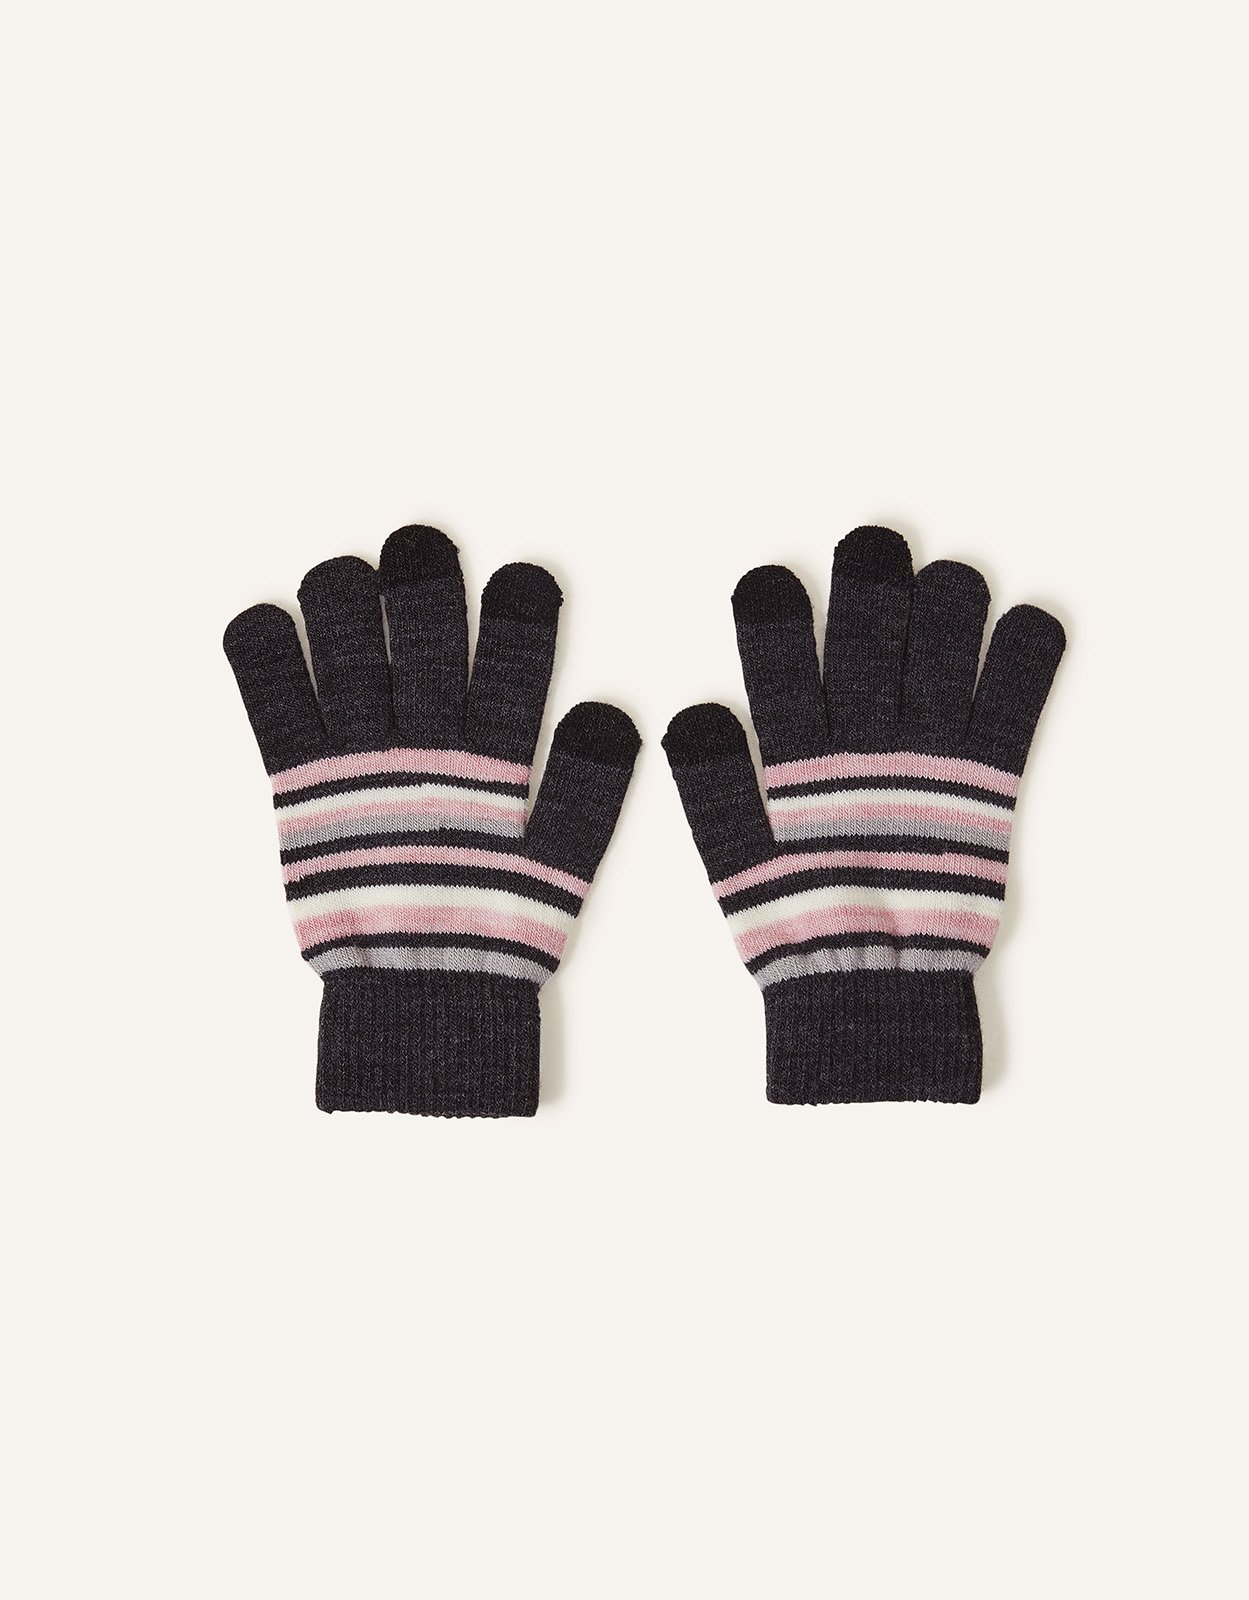 Accessorize Women's Grey/White Stripe Stretch Touchscreen Gloves, Size: One Size